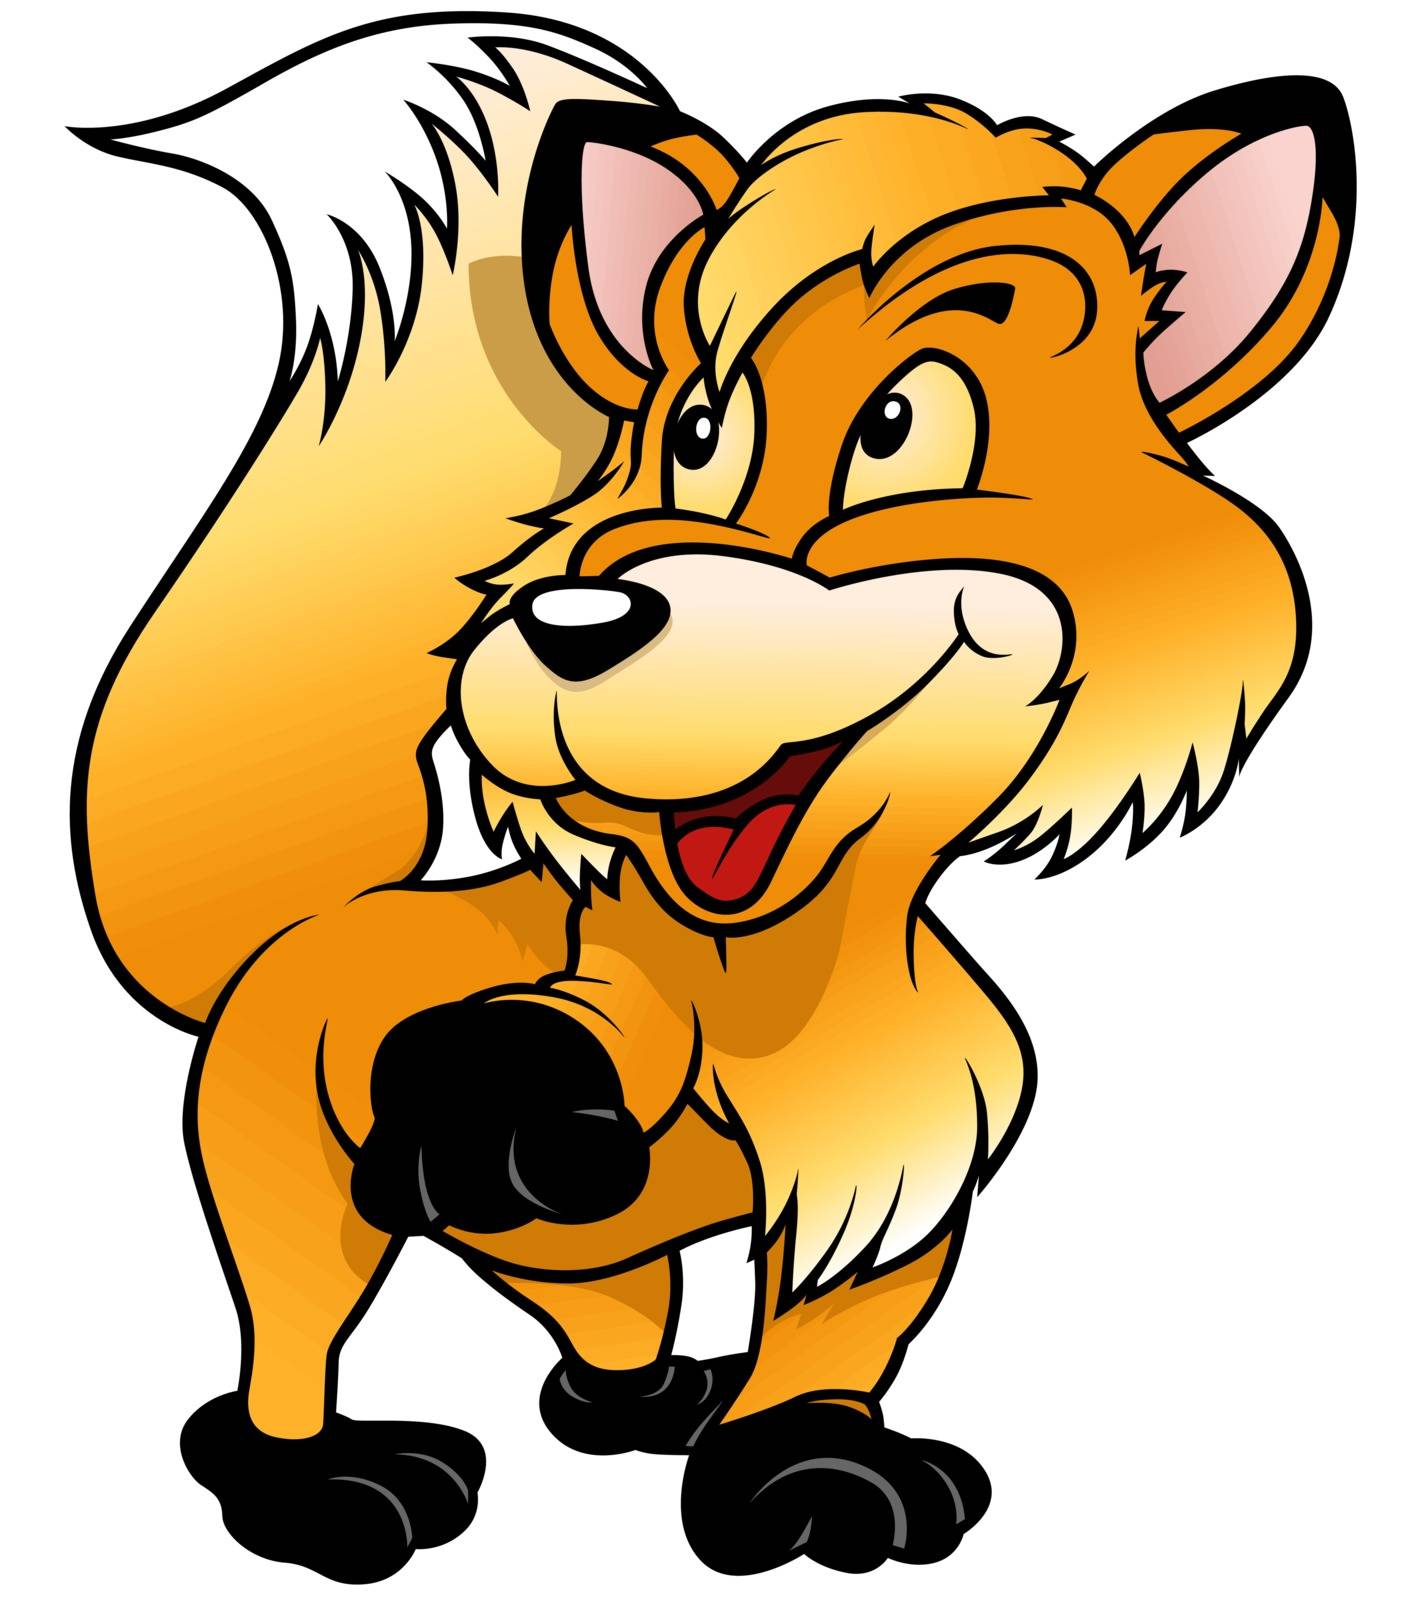 Cheerful Fox Raising Paw by illustratorCZ